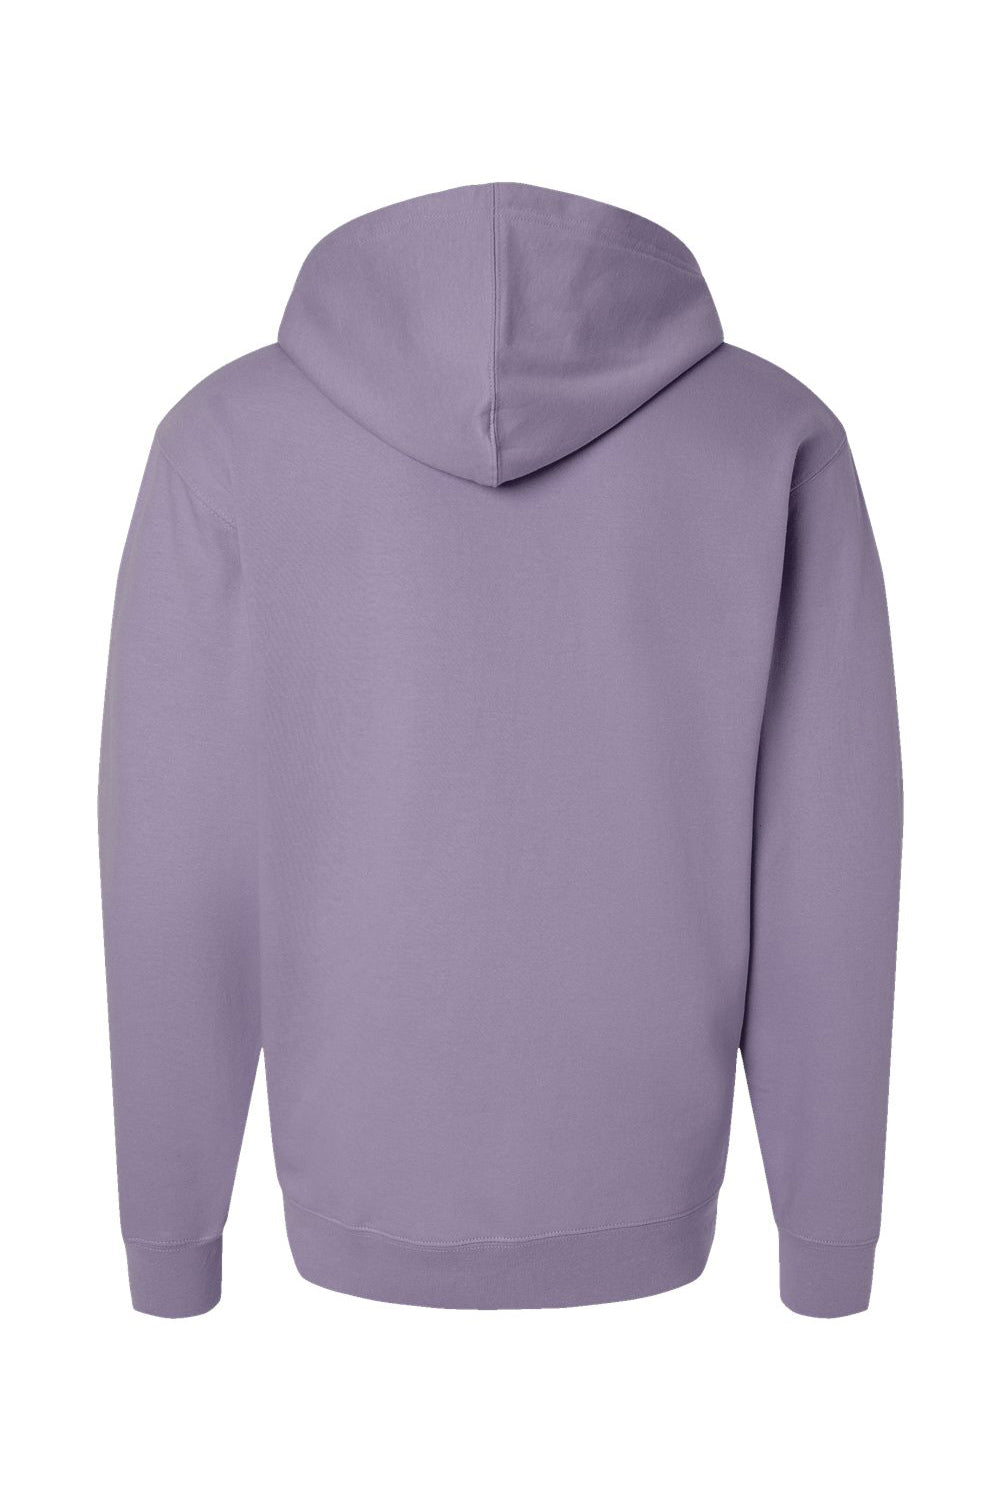 Independent Trading Co. SS4500 Mens Hooded Sweatshirt Hoodie Plum Purple Flat Back